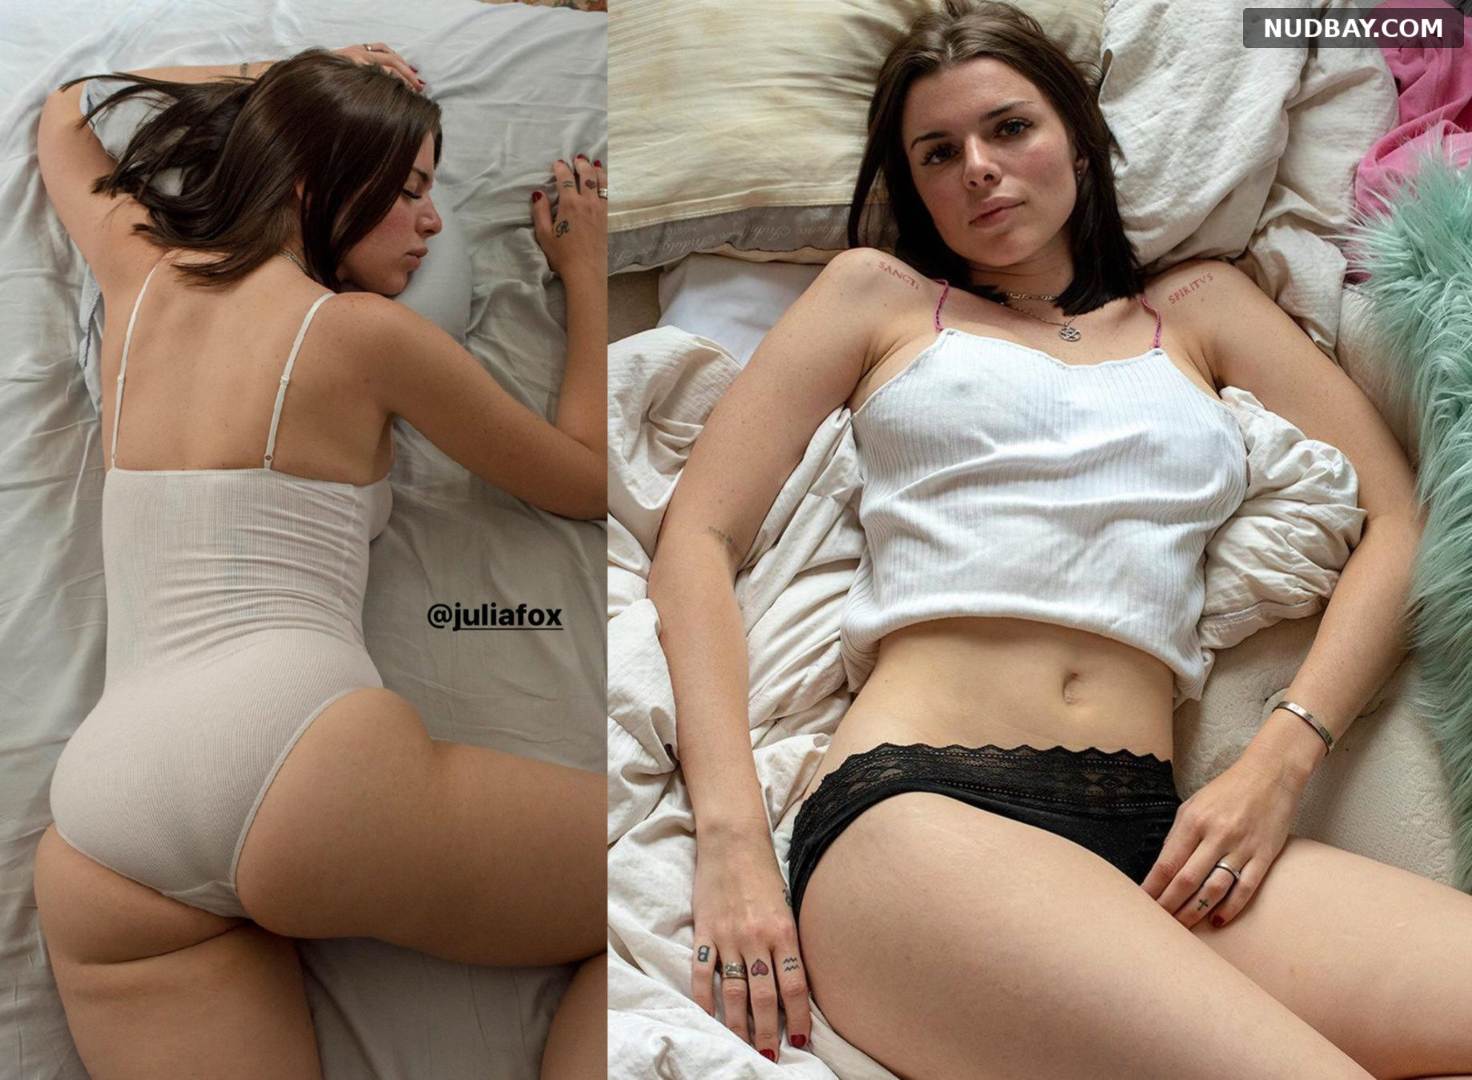 Julia Fox nude on bed Instagram photos Jul 2020